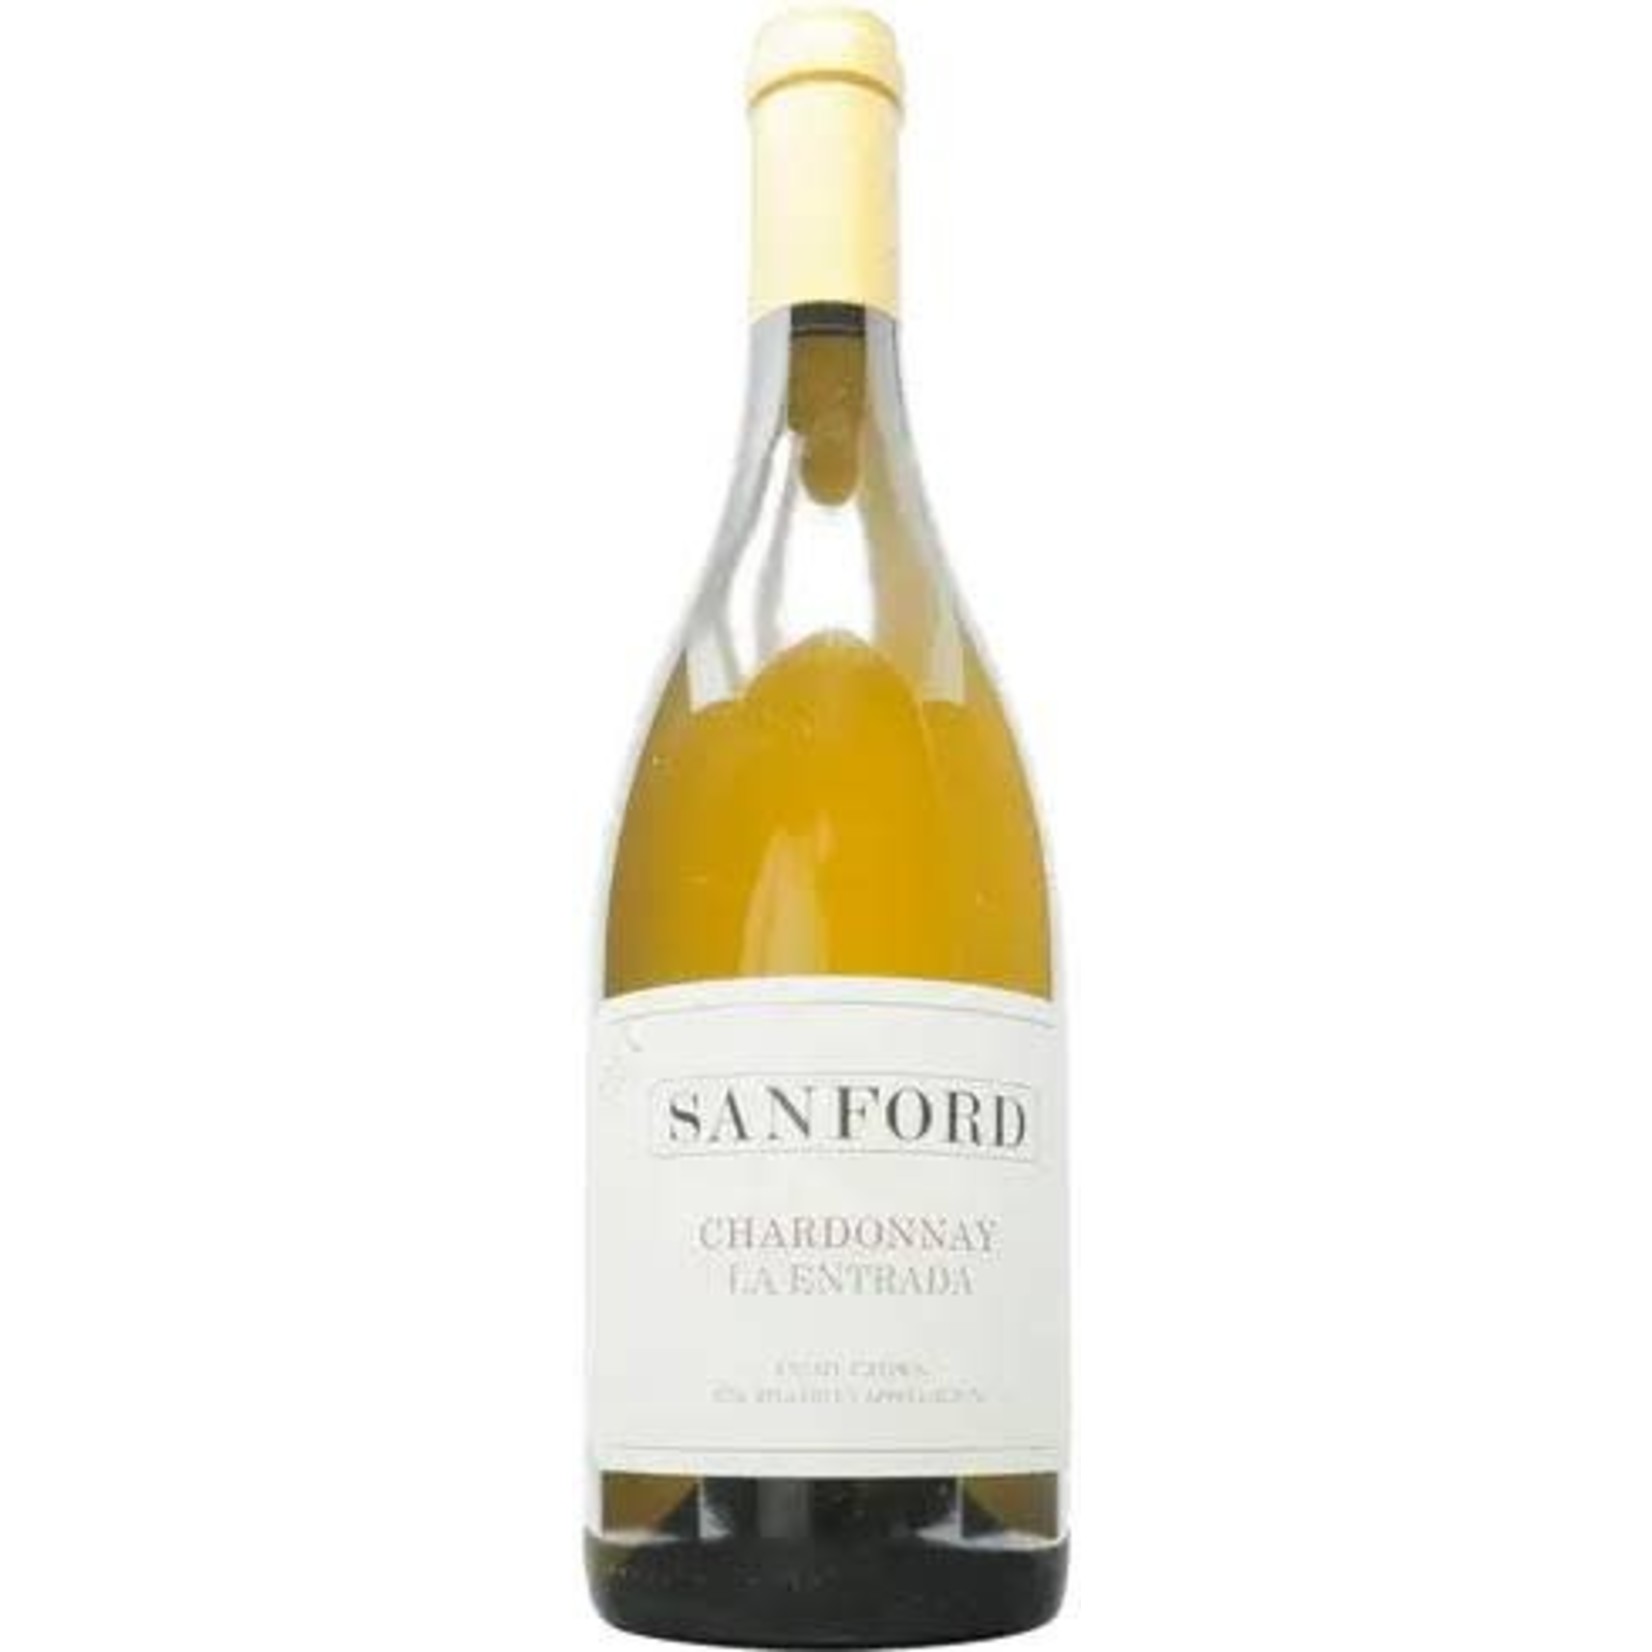 2017 Sanford 'La Entrada' Chardonnay